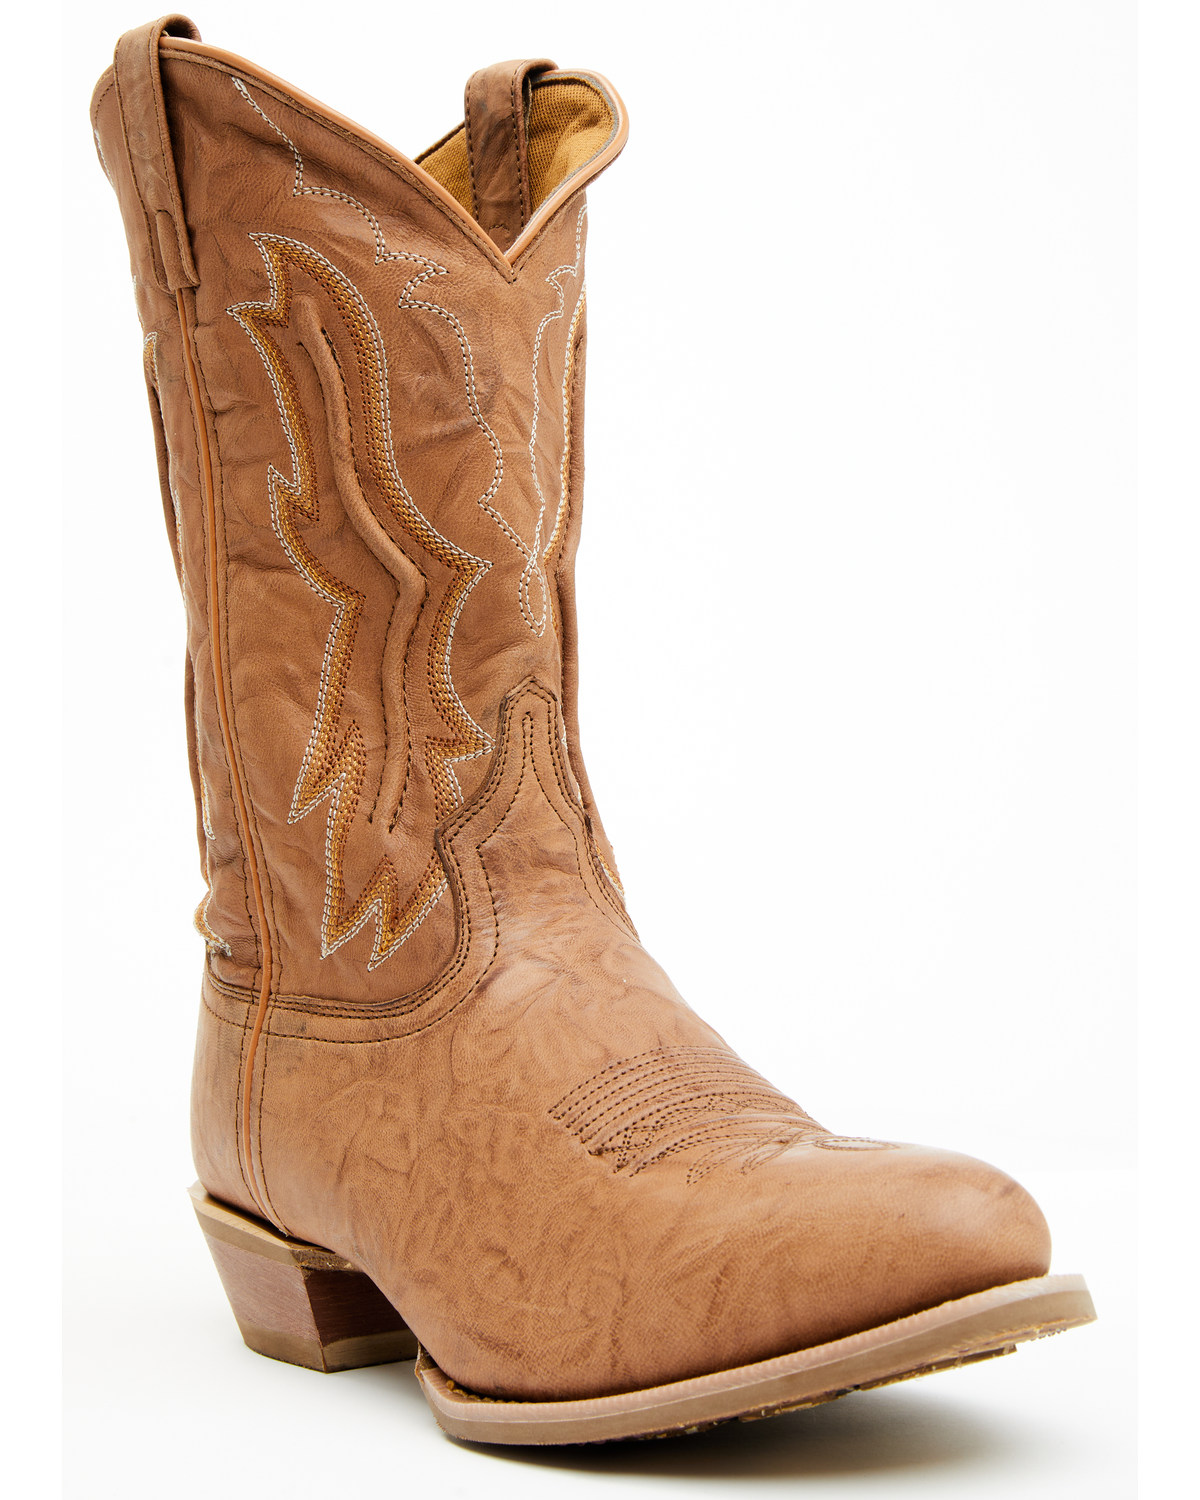 Laredo Men's Cutlass Western Boots - Medium Toe